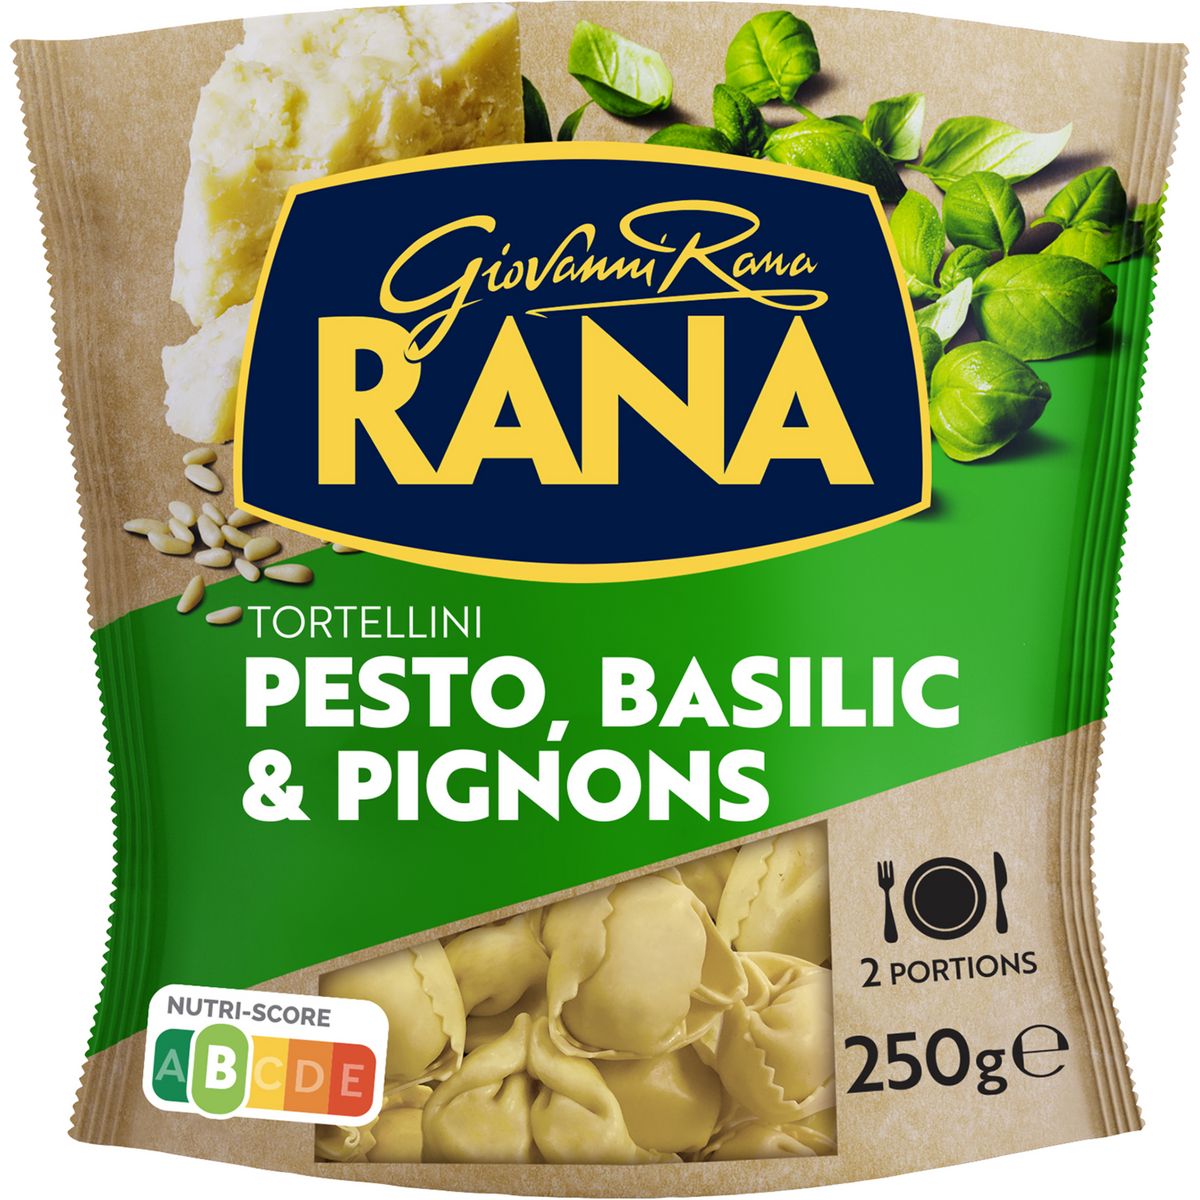 RANA Tortellini pesto, basilic & pignons 2 portions 250g